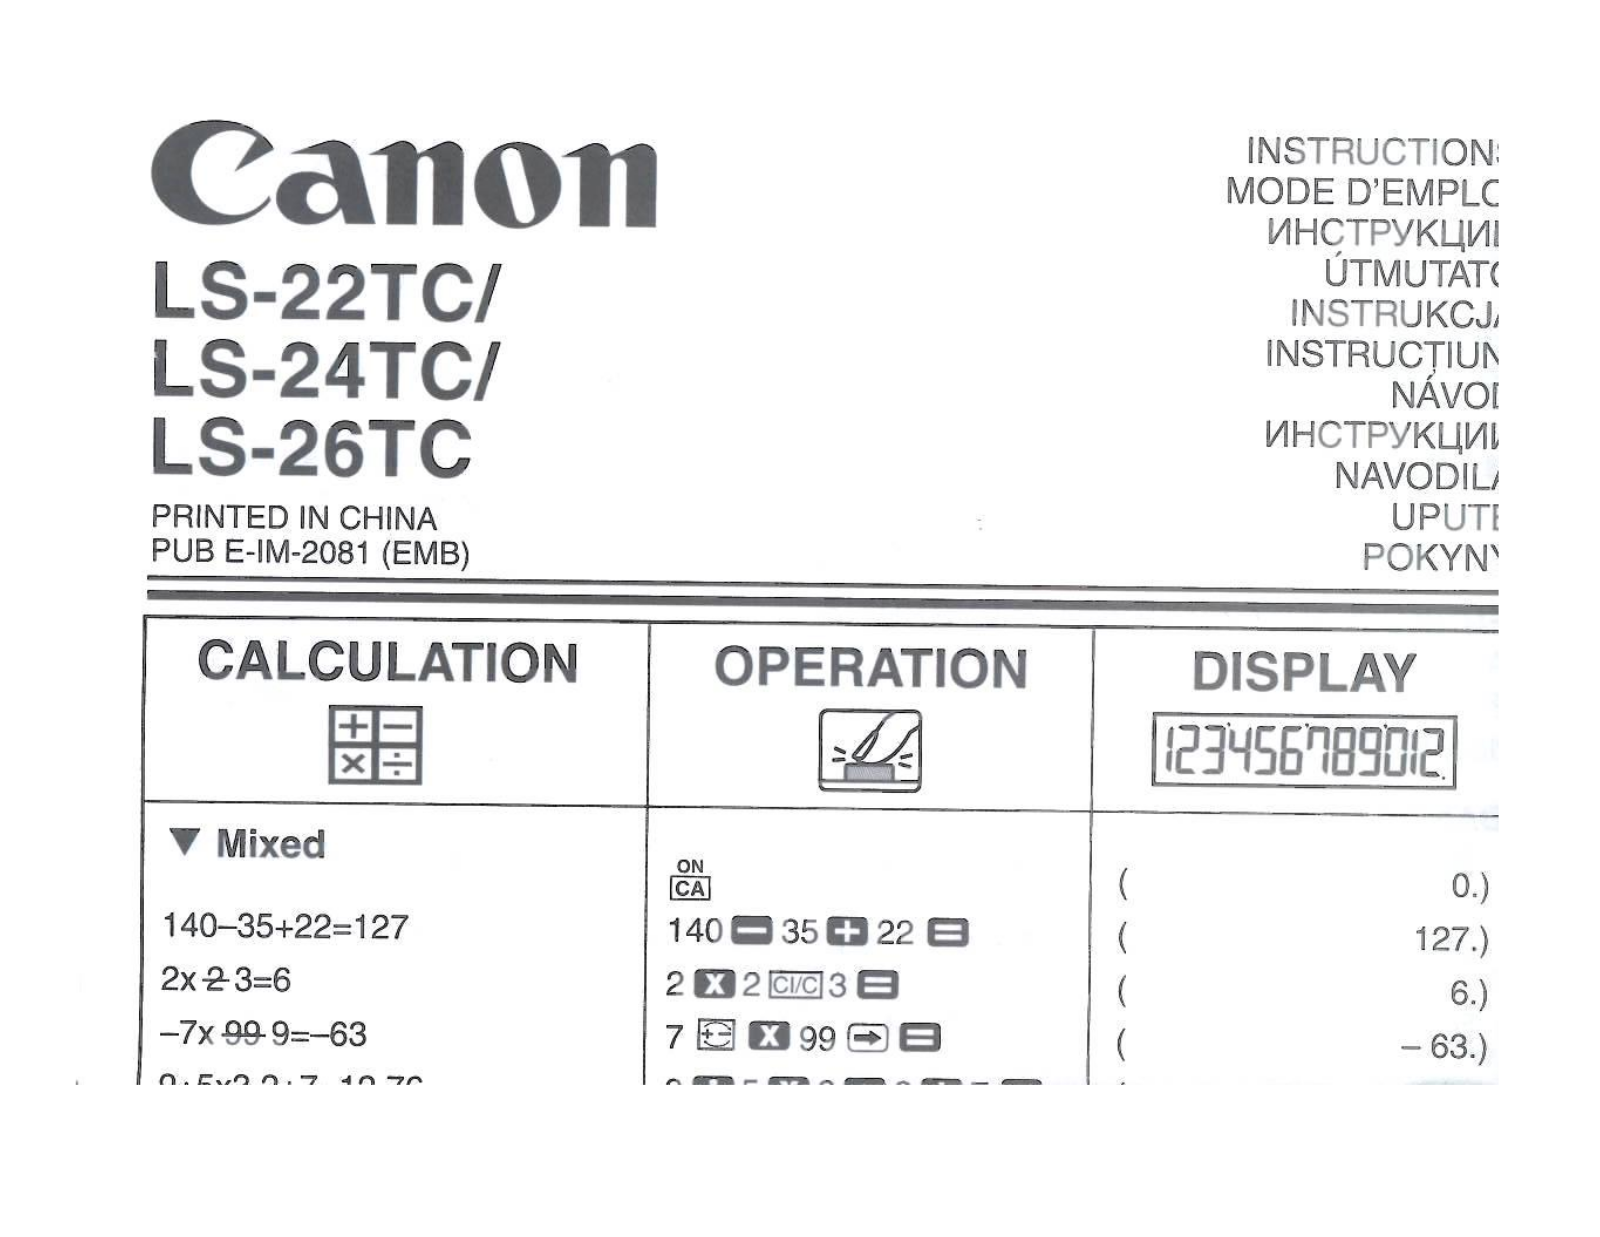 Canon LS-26 TC User Manual